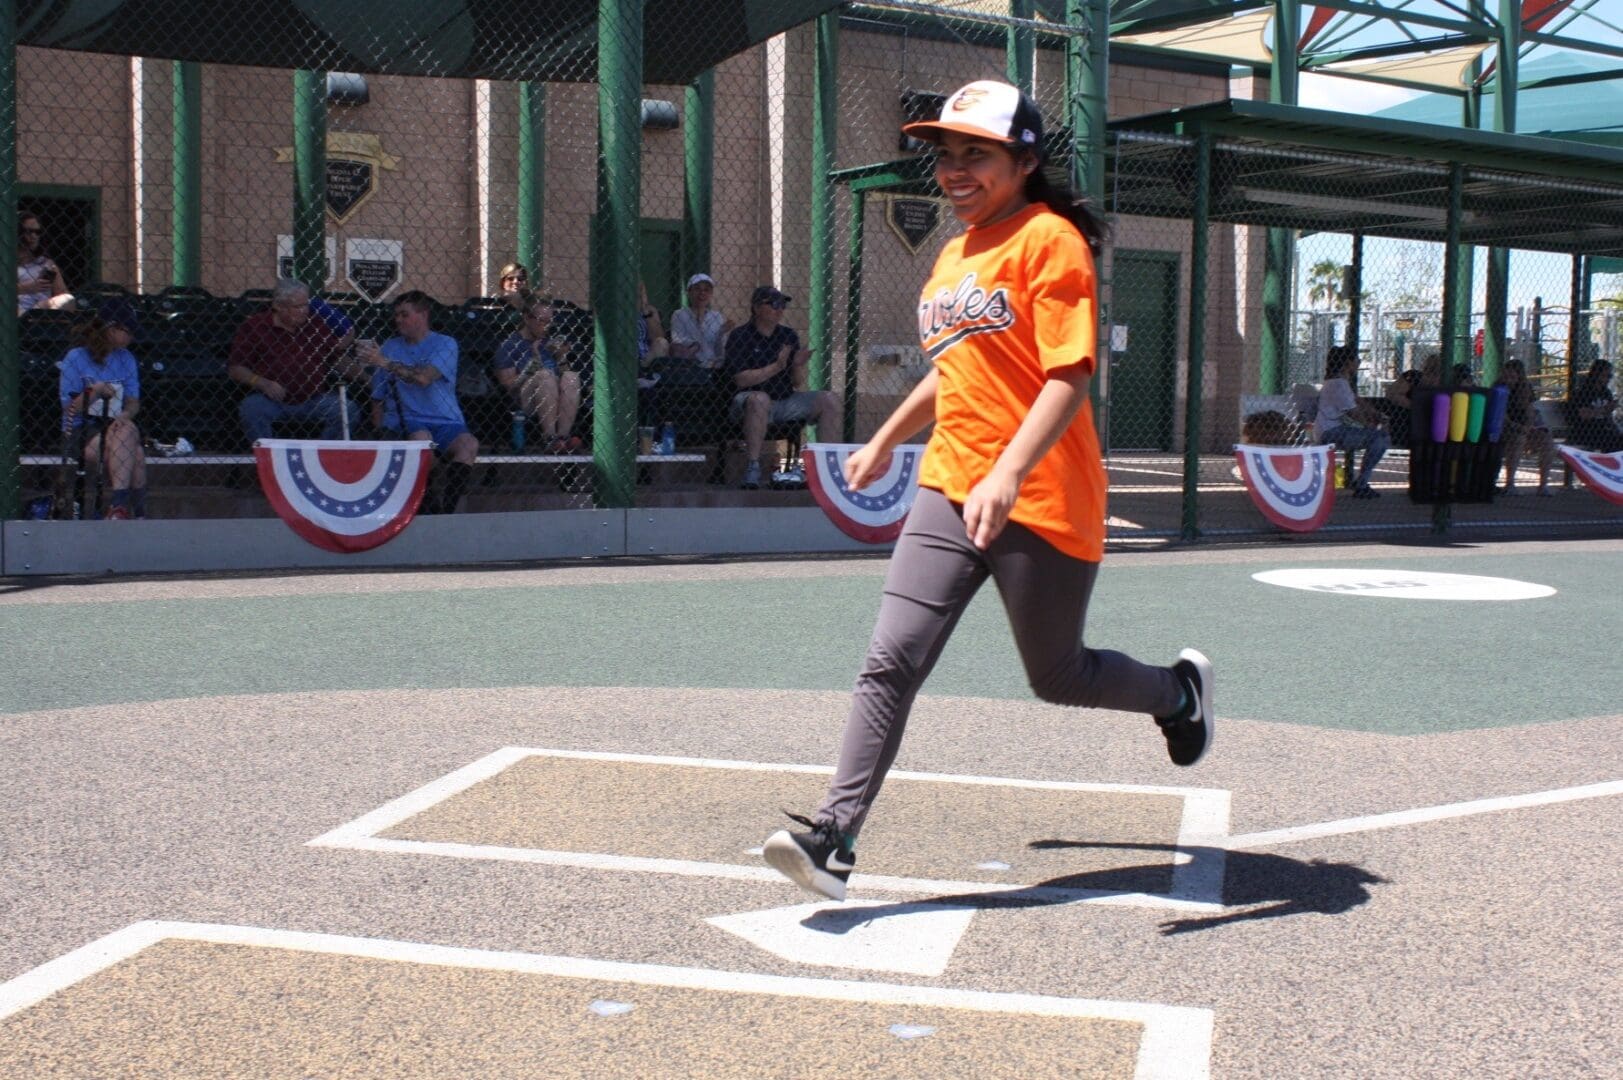 A girl is running on a baseball field.